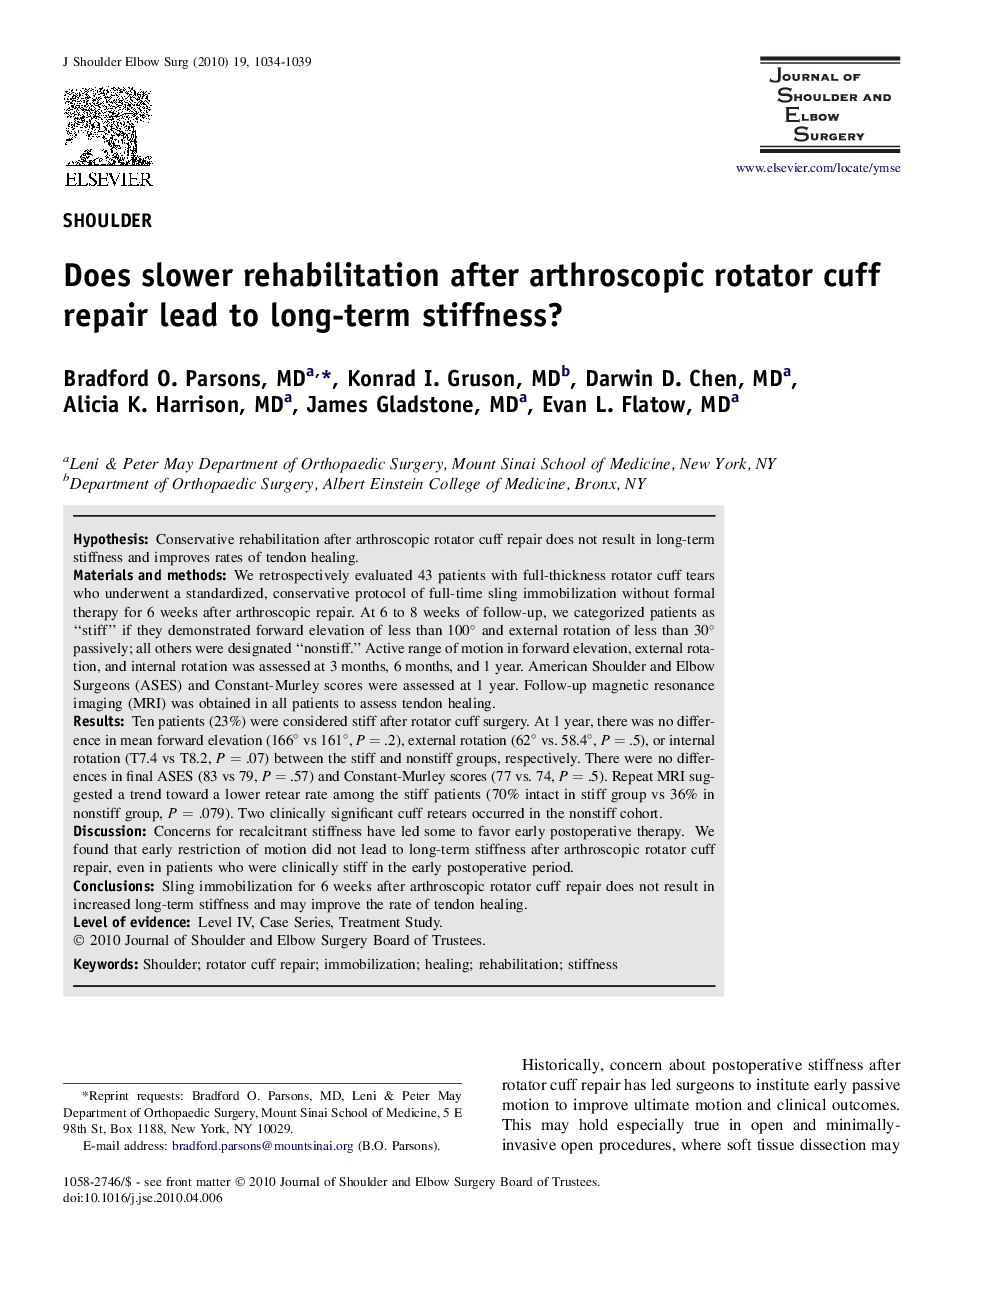 Does slower rehabilitation after arthroscopic rotator cuff repair lead to long-term stiffness?